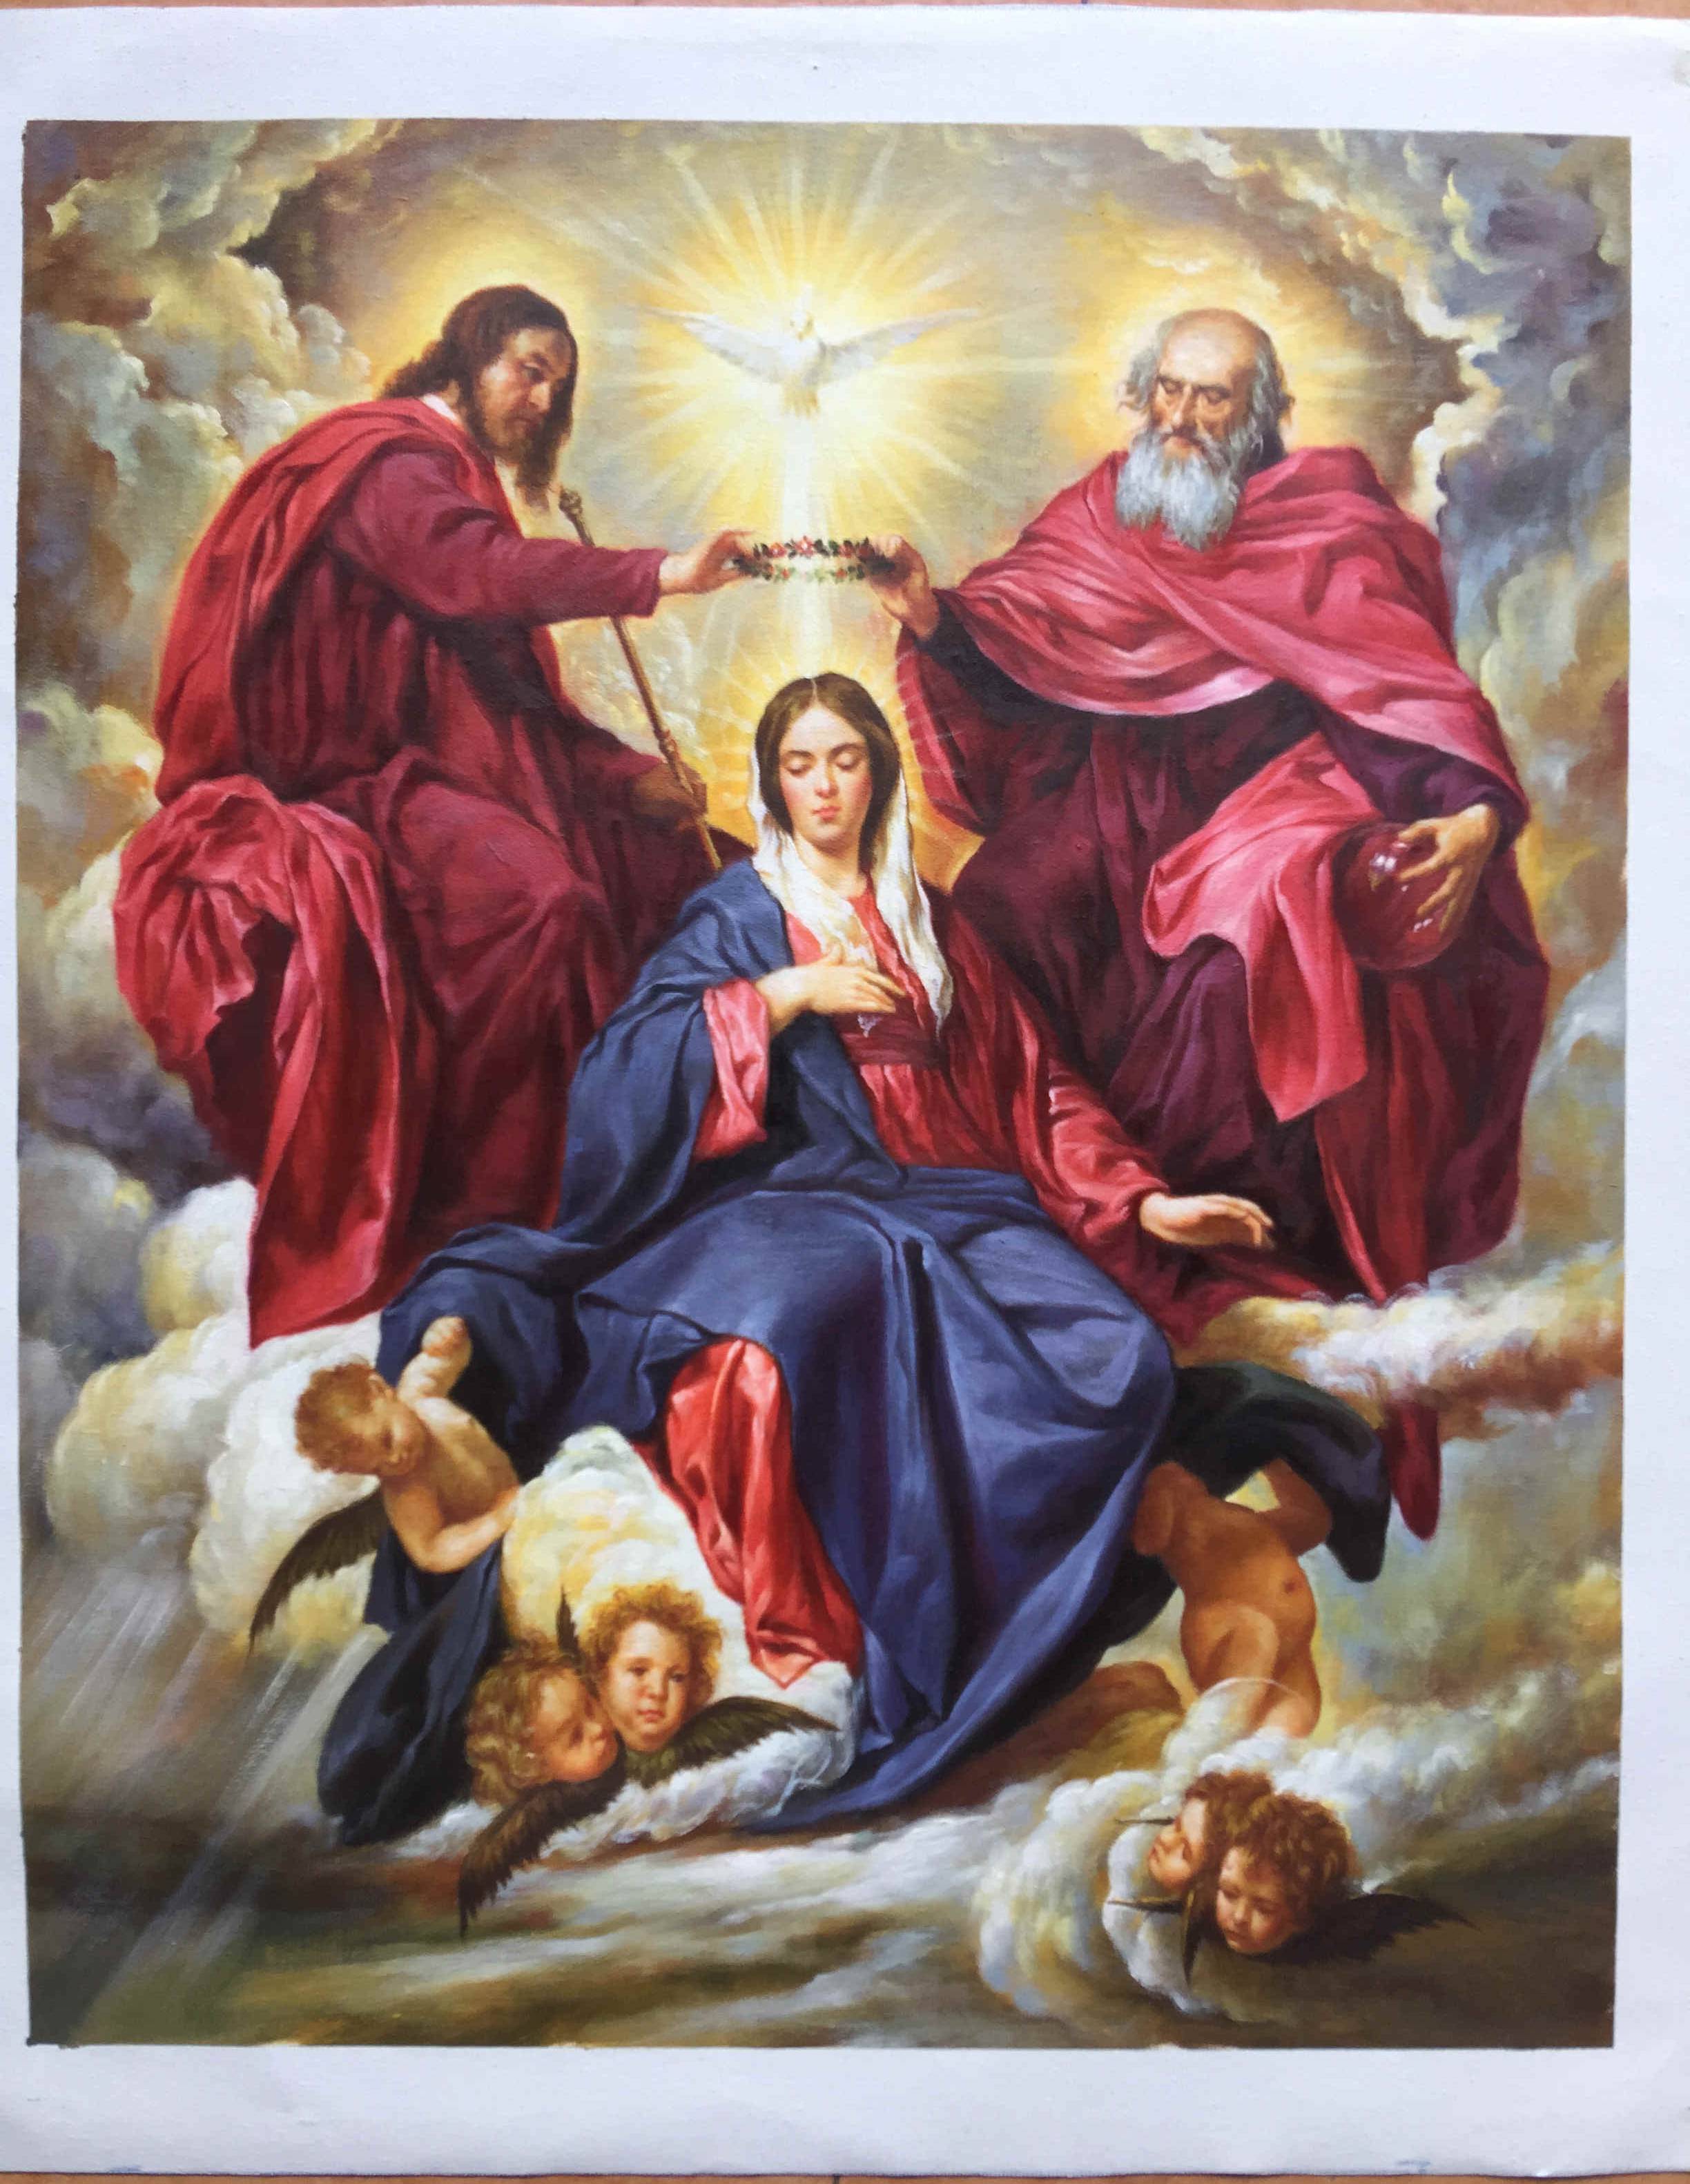 Coronation of the Virgin - Diego Velazquez